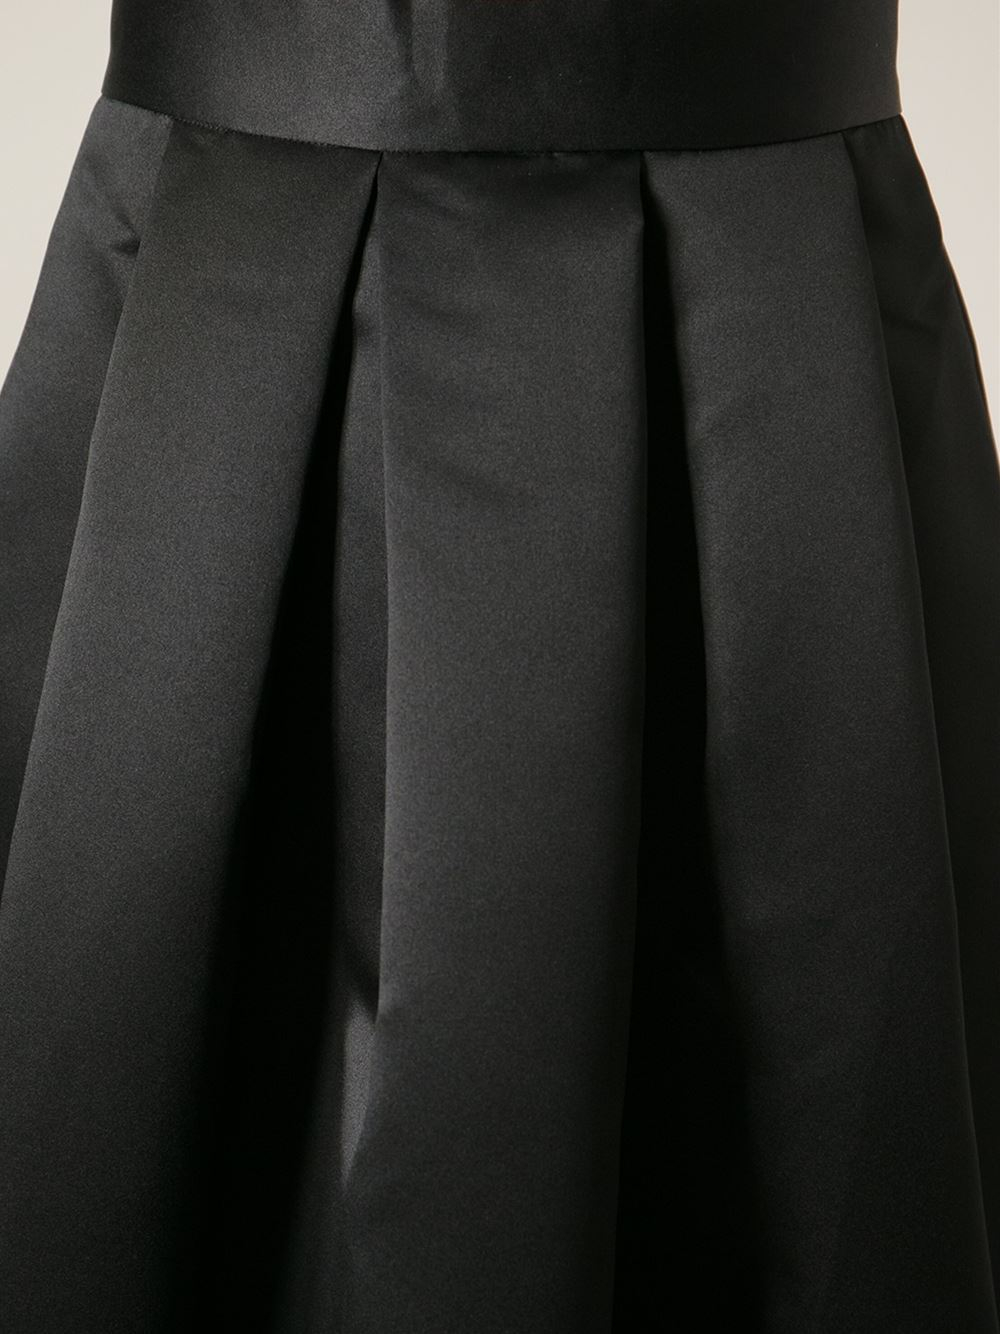 Lulu & Co Satin Box Pleated Skirt in Black | Lyst